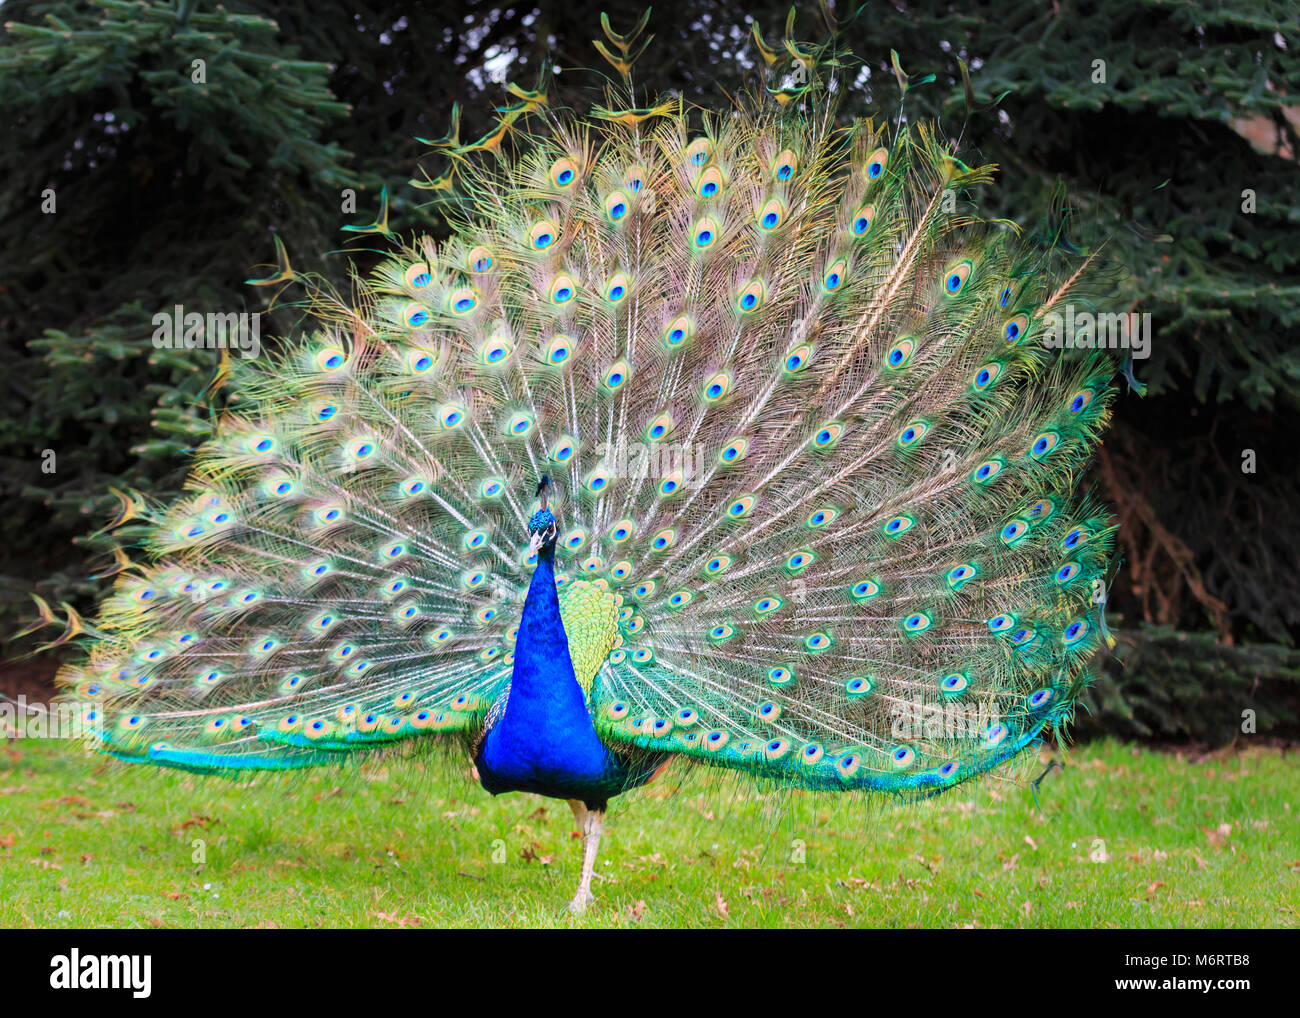 Peacock, ave azul masculina (pavo cristatus) muestra completa de plumas en zonas verdes Foto de stock